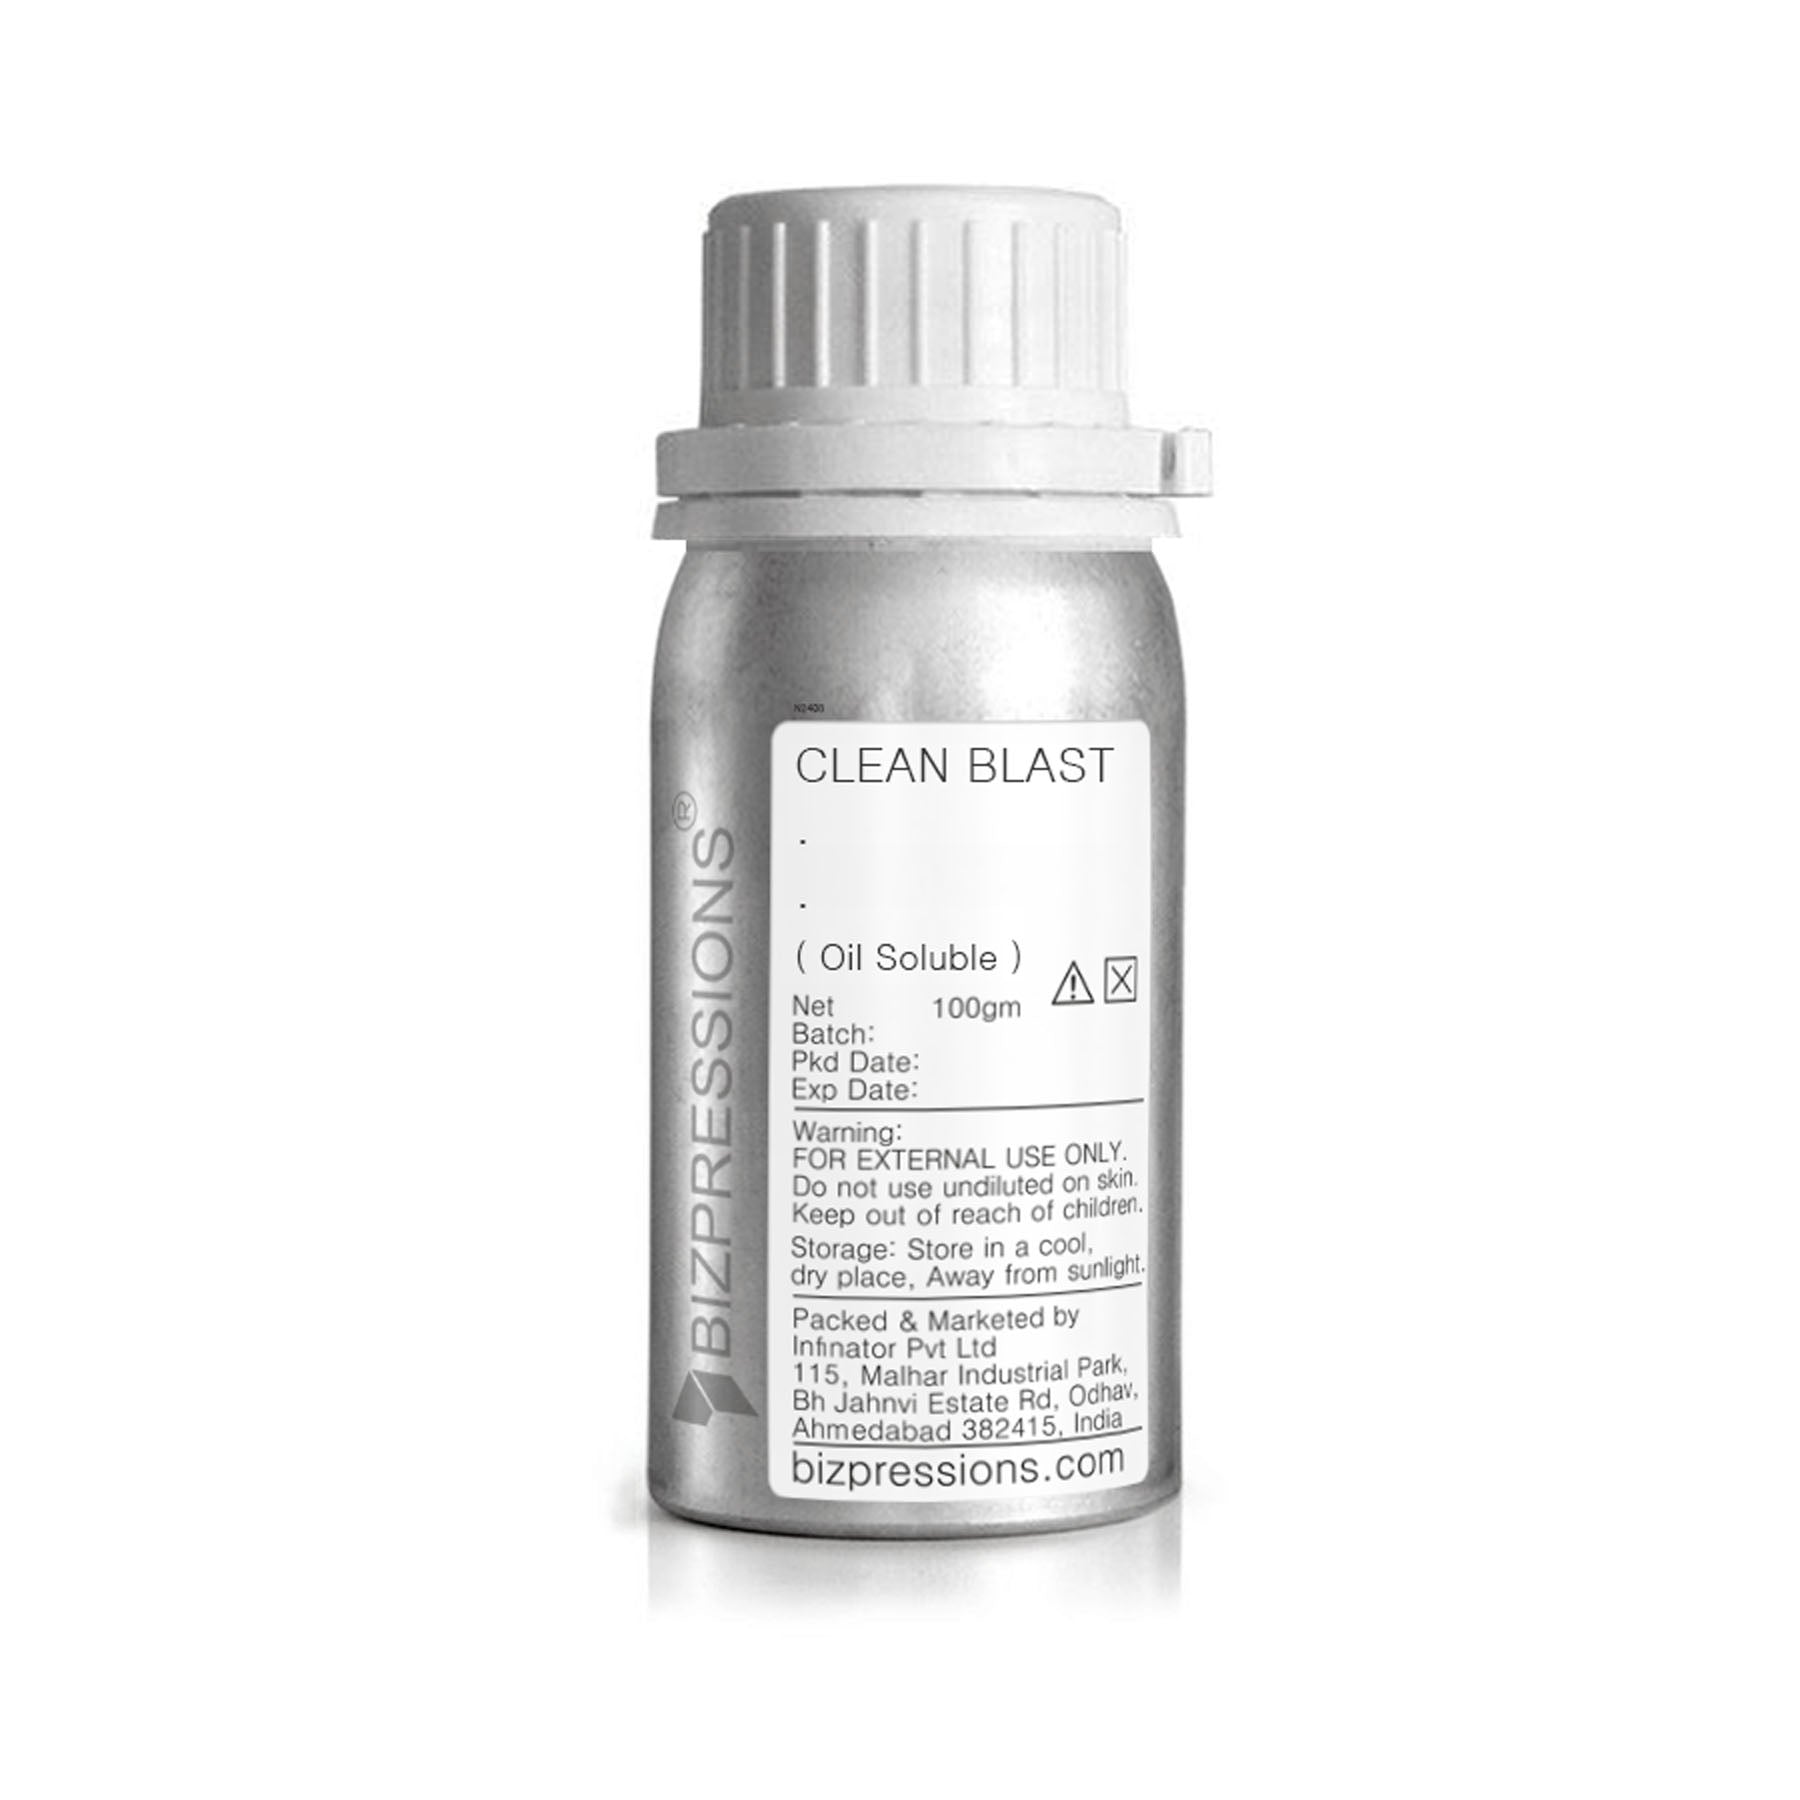 CLEAN BLAST - Fragrance ( Oil Soluble ) - 100 gm